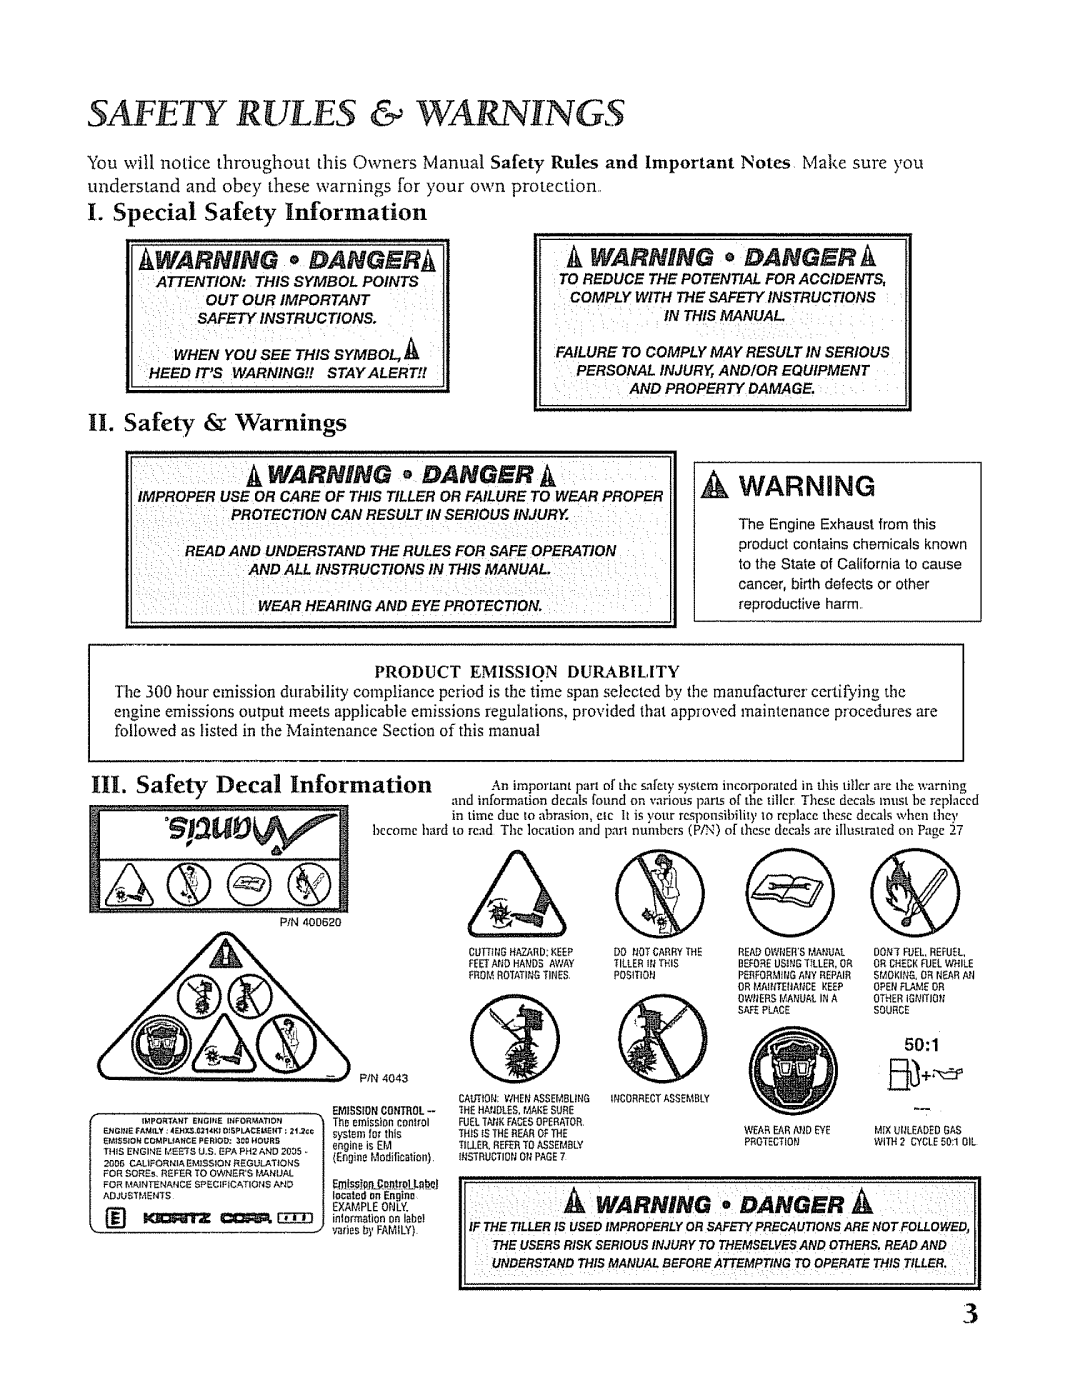 Mantis SV-5C/2 manual Safety Rules & Warnings, Awarning Dangera, I. Special Safety Information, A Warning * Danger A 